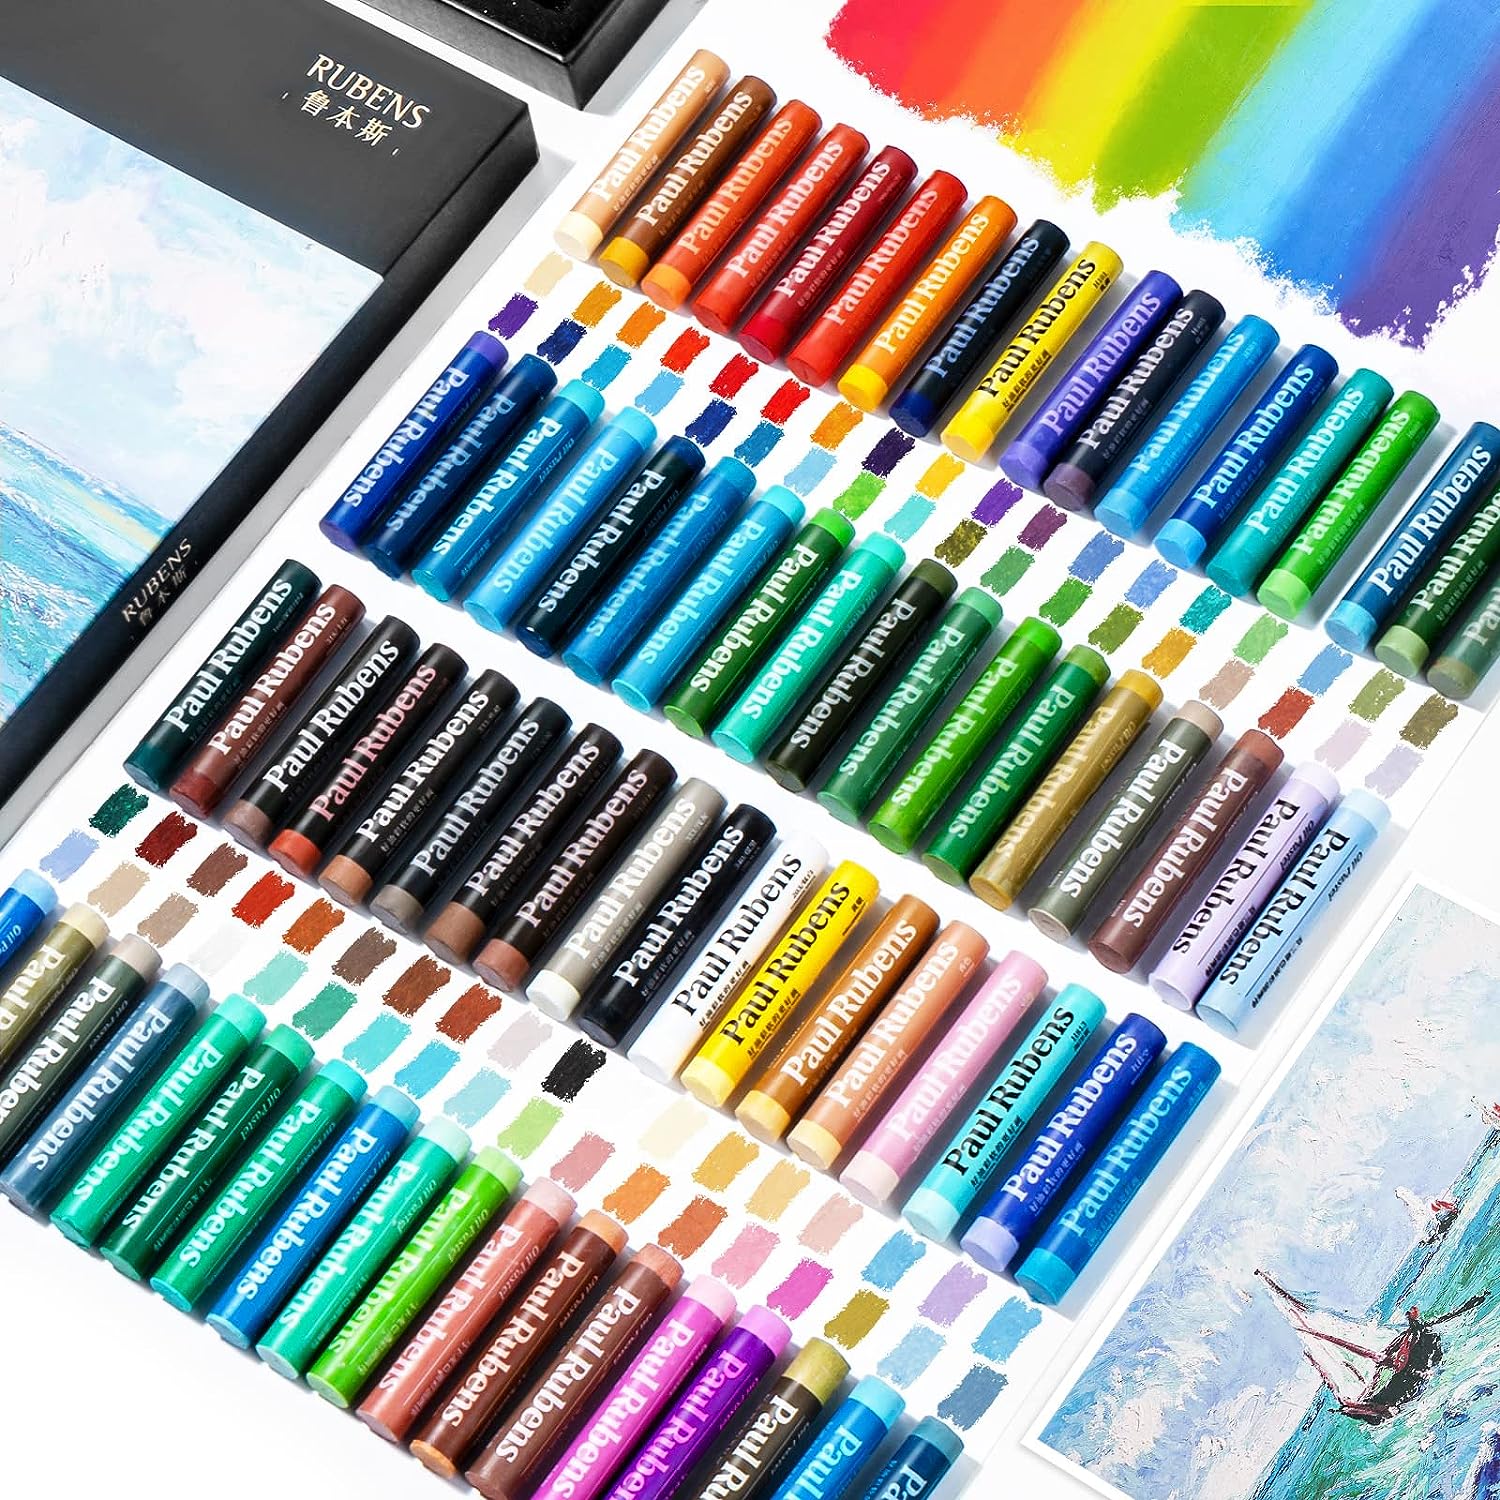 Faber-Castell Creative Studio Oil Pastel Crayons - 36 Vibrant Colors